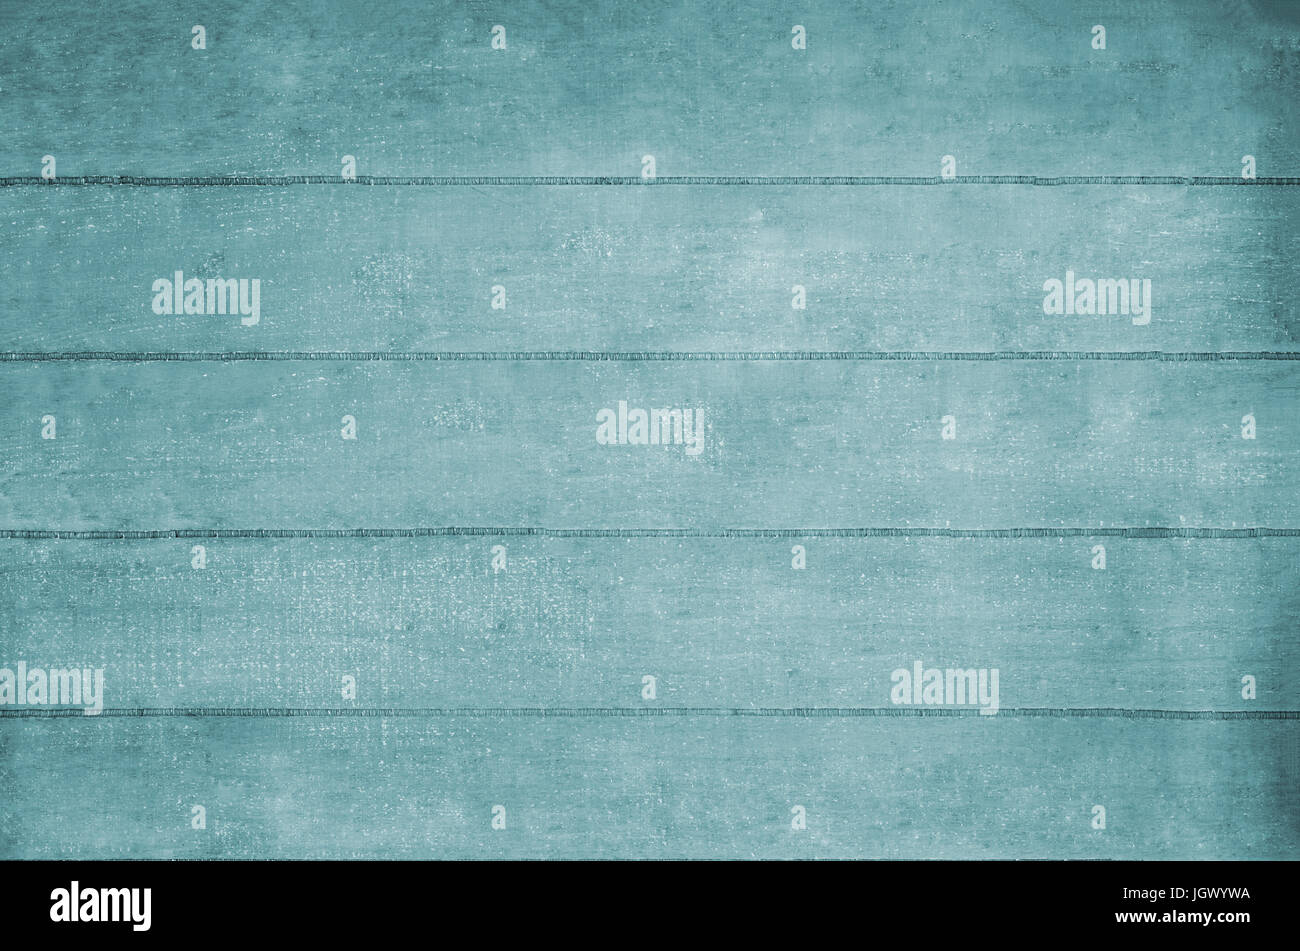 Holzbrett Hintergrundtextur in blassen blauen Farbtönen. Stockfoto